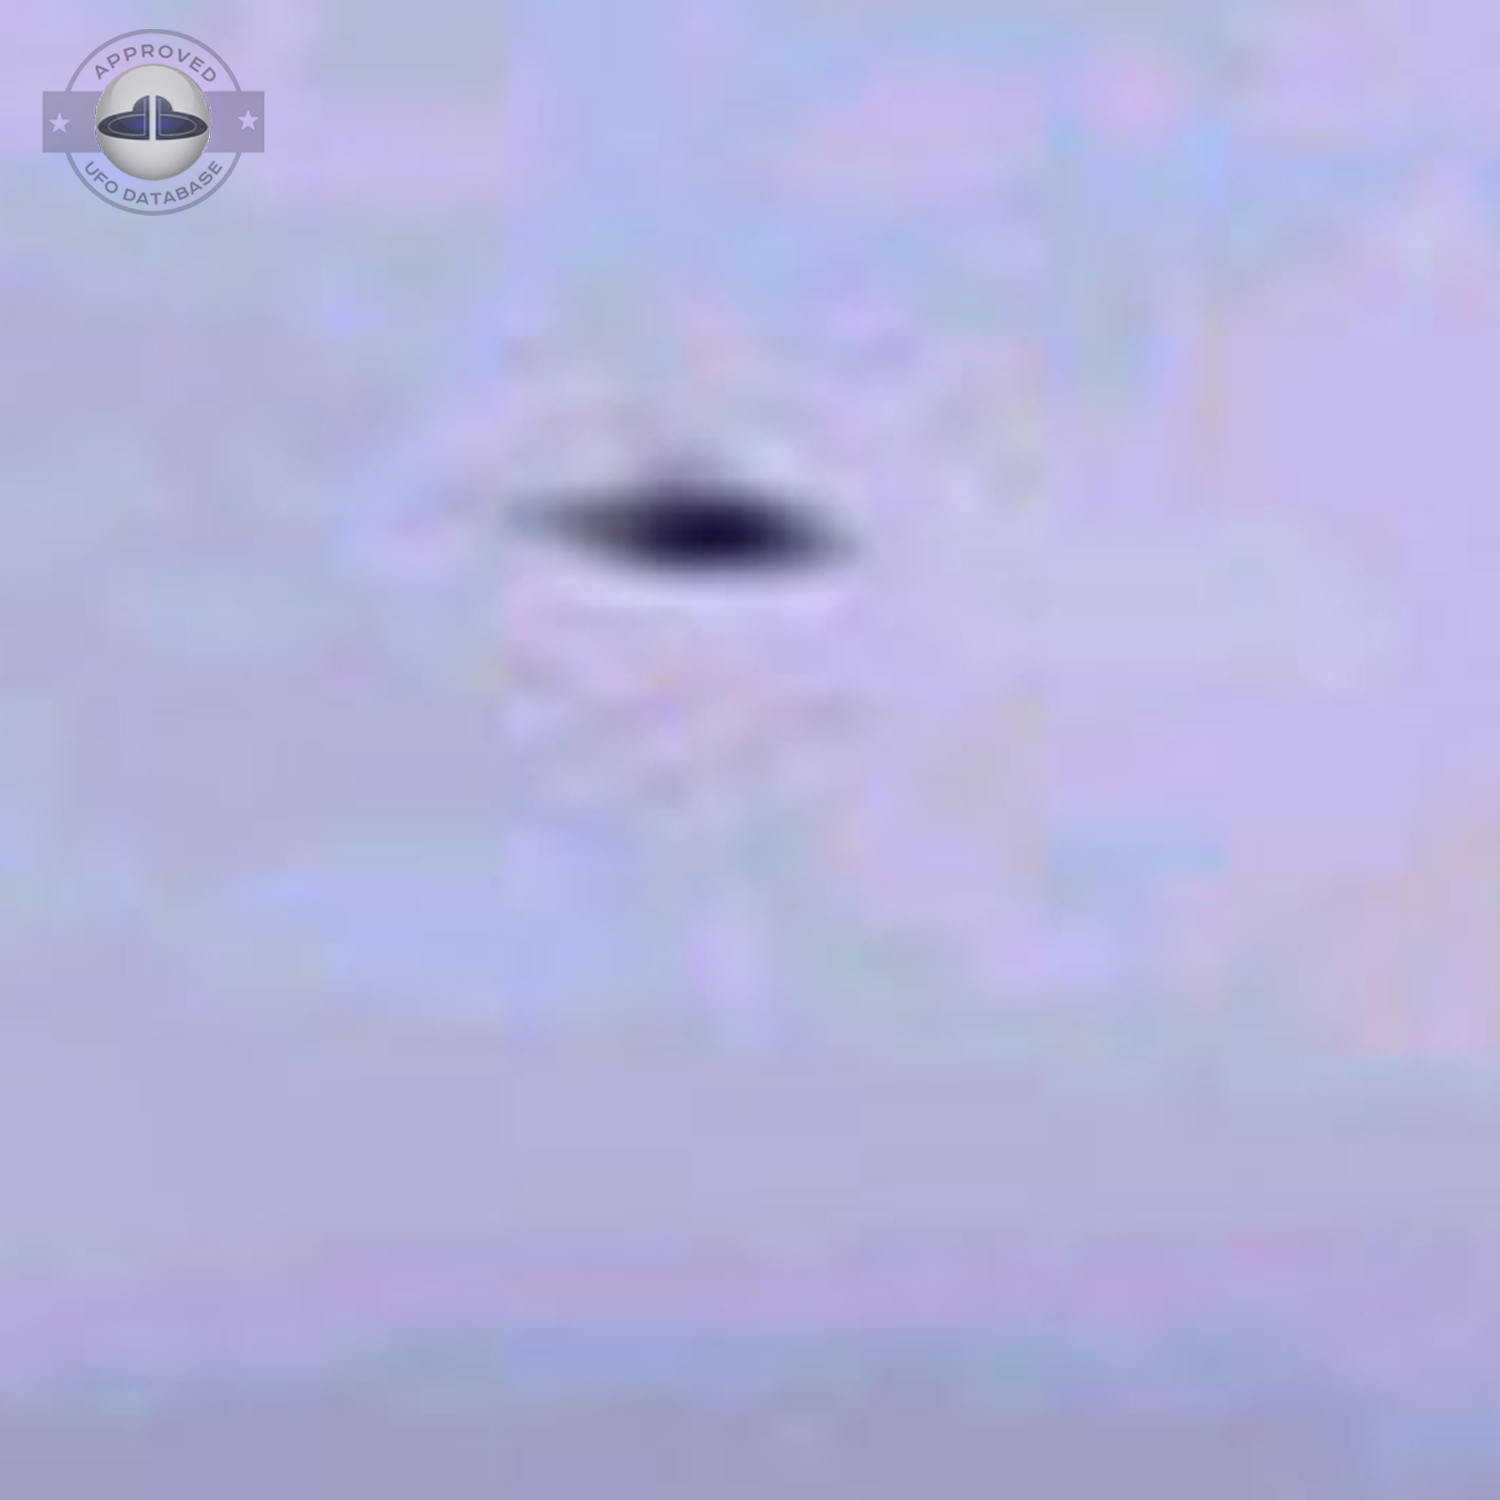 UFO over electric line in grey sky - UFO picture taken in Valcheta UFO Picture #20-3